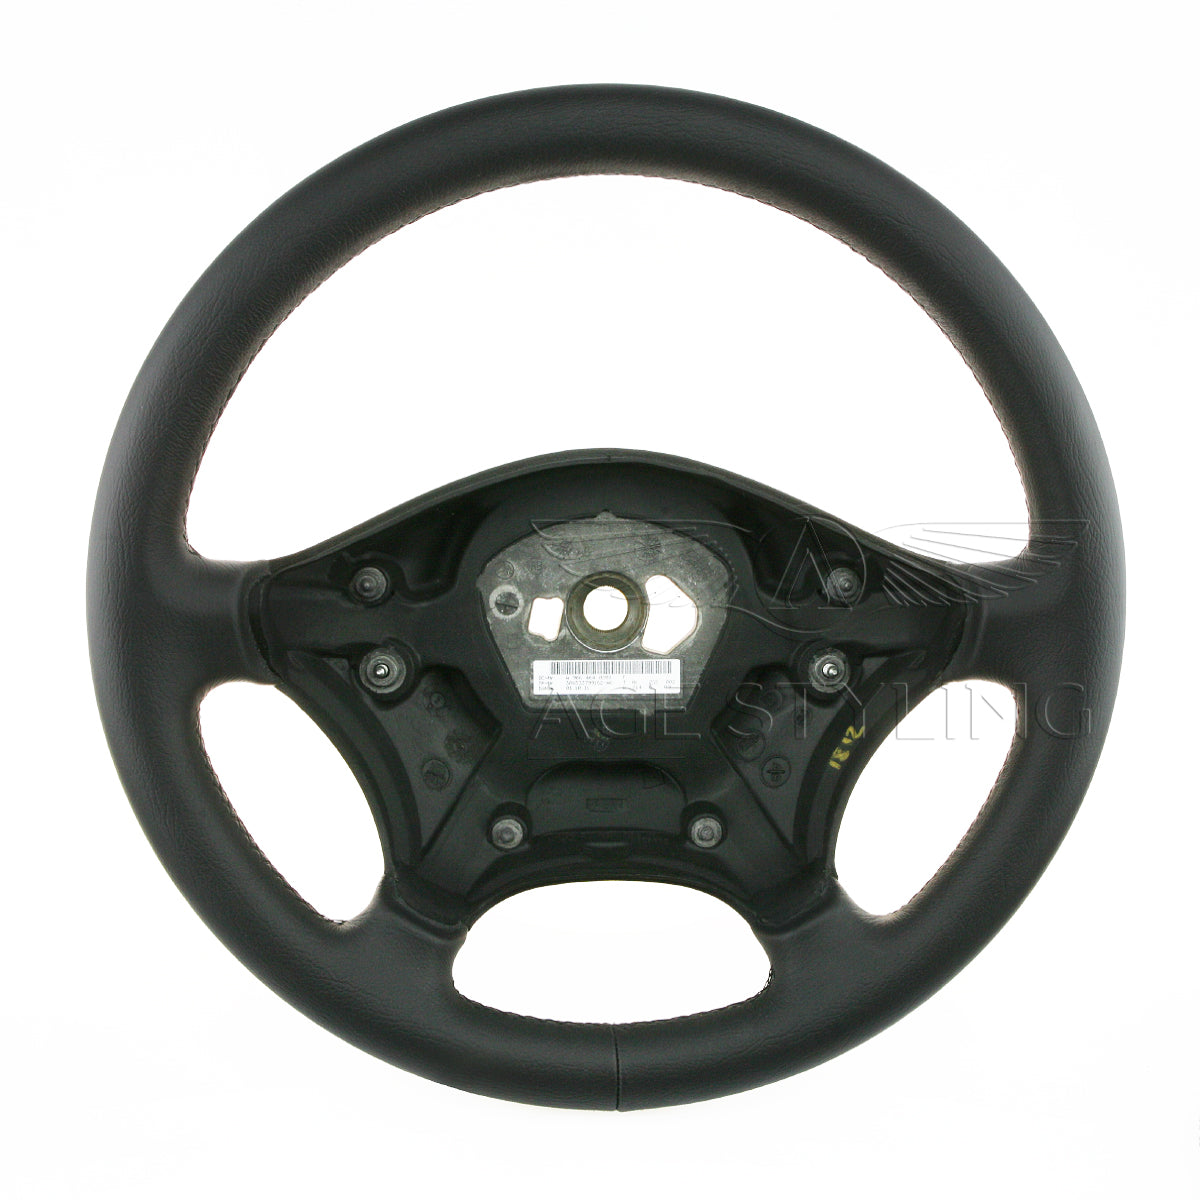 Mercedes-Benz Sprinter Genuine Leather Steering Wheel Cover 38 40 42 45cm